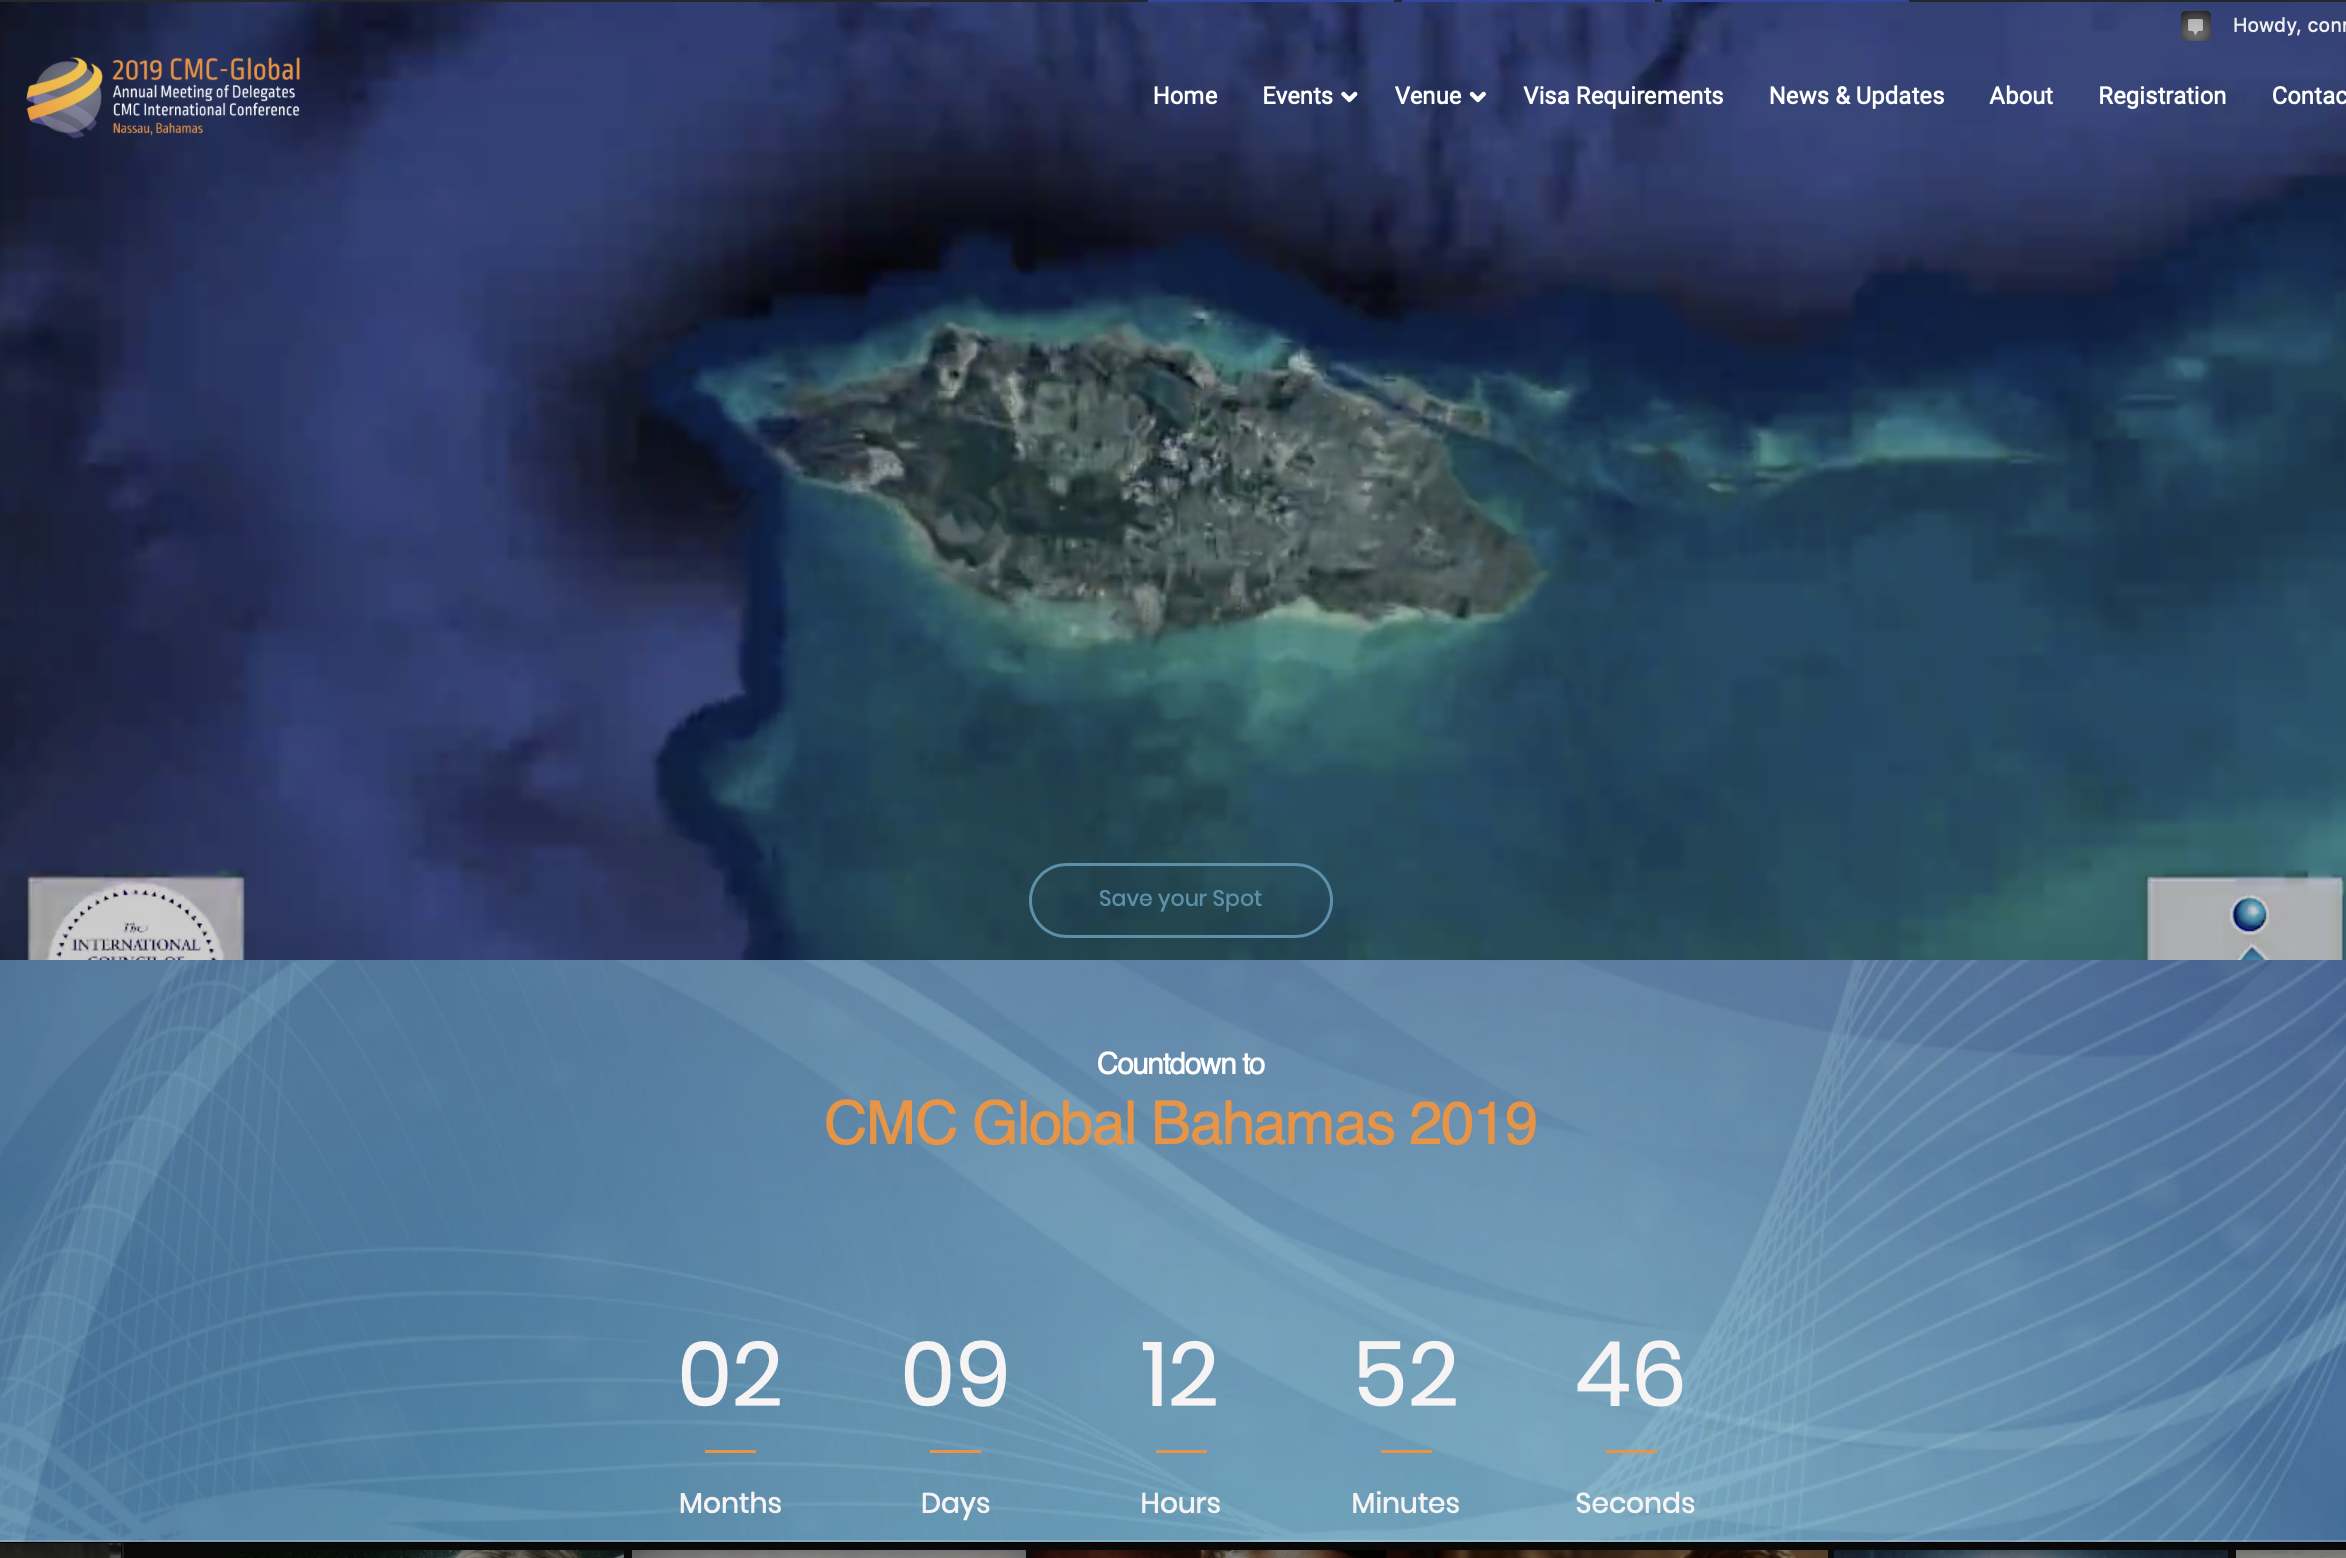 CMC Global Bahamas 2019